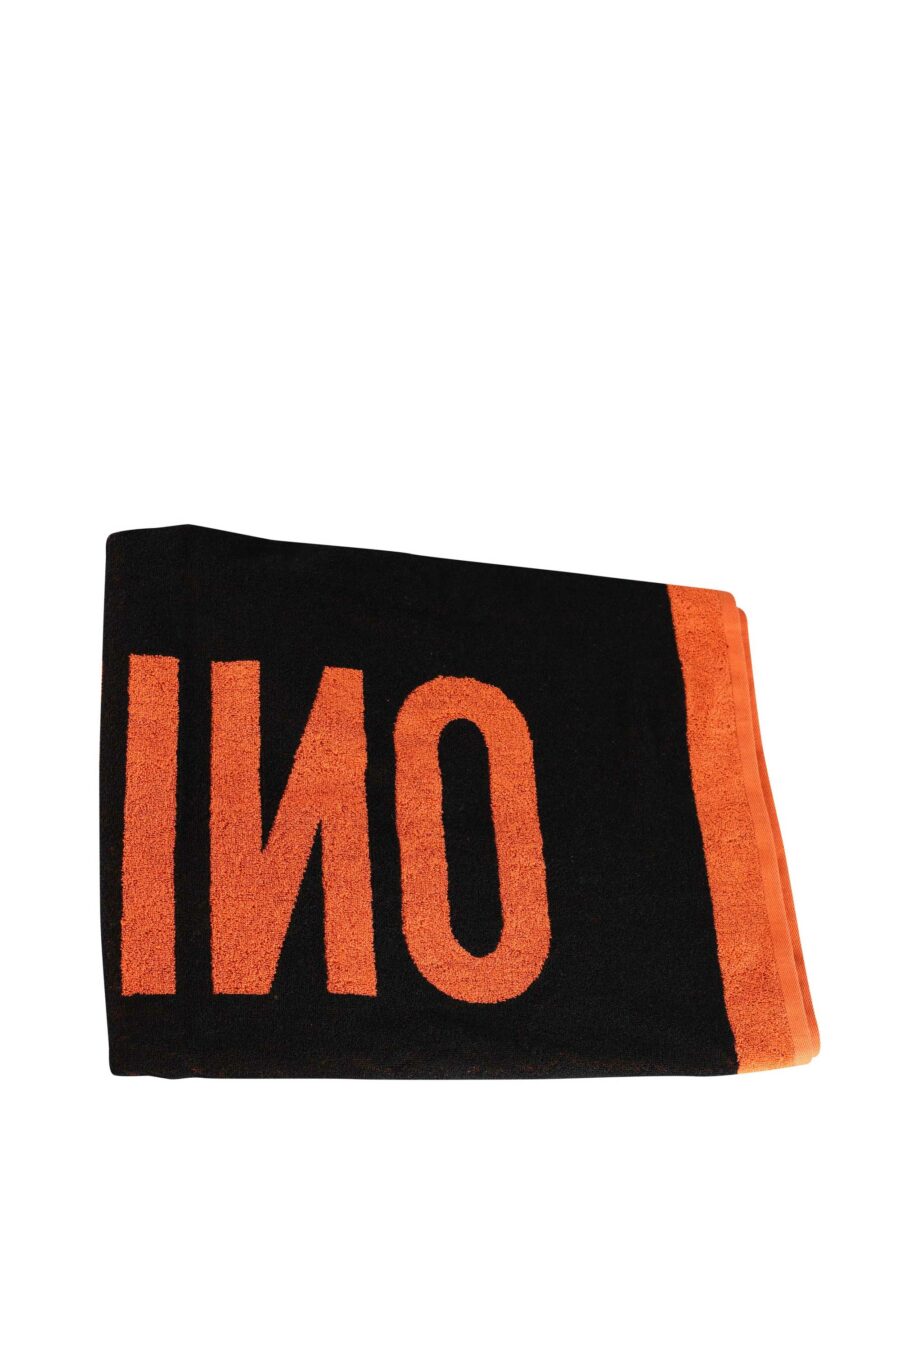 Toalha laranja com maxilogo - IMG 1032